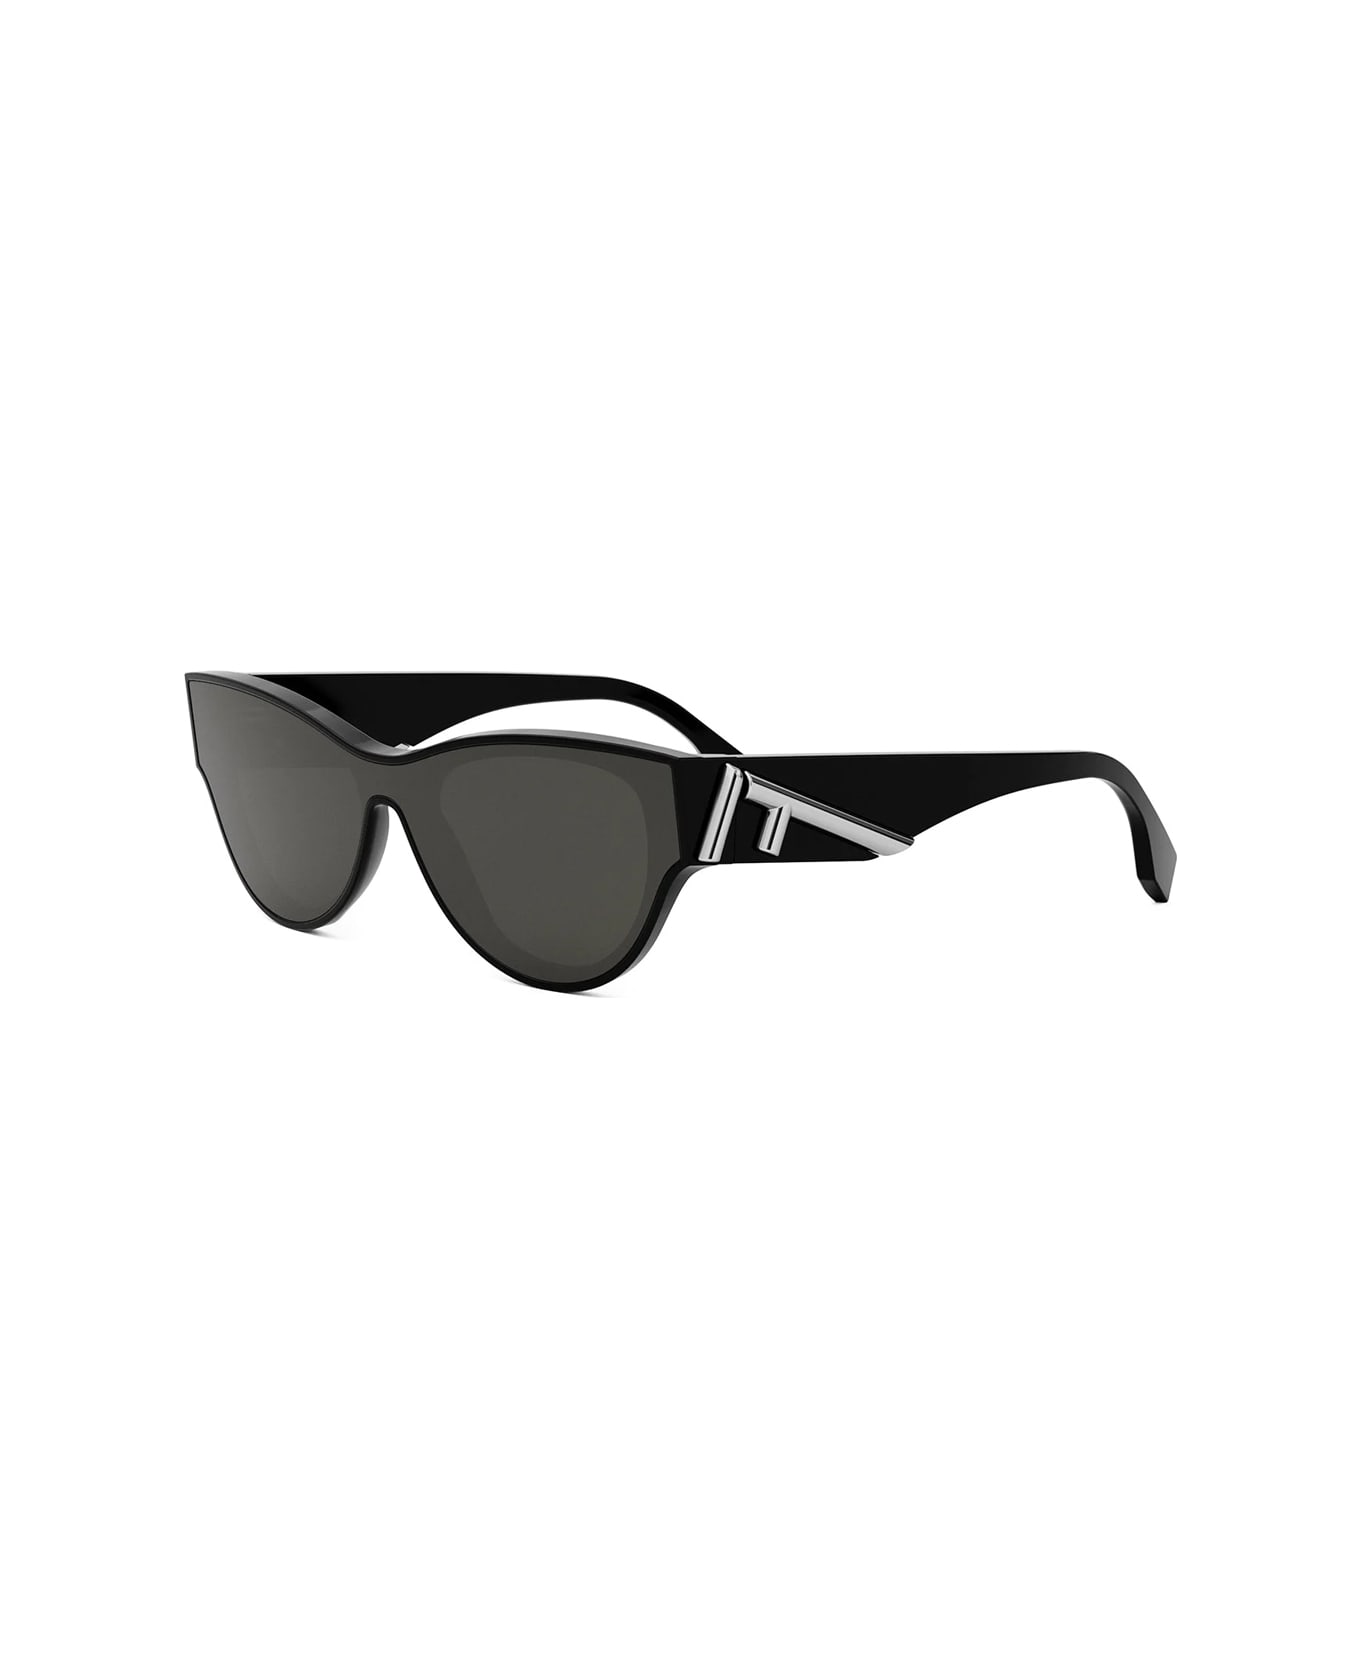 Fendi Eyewear Fe40135i 01a Sunglasses - Nero